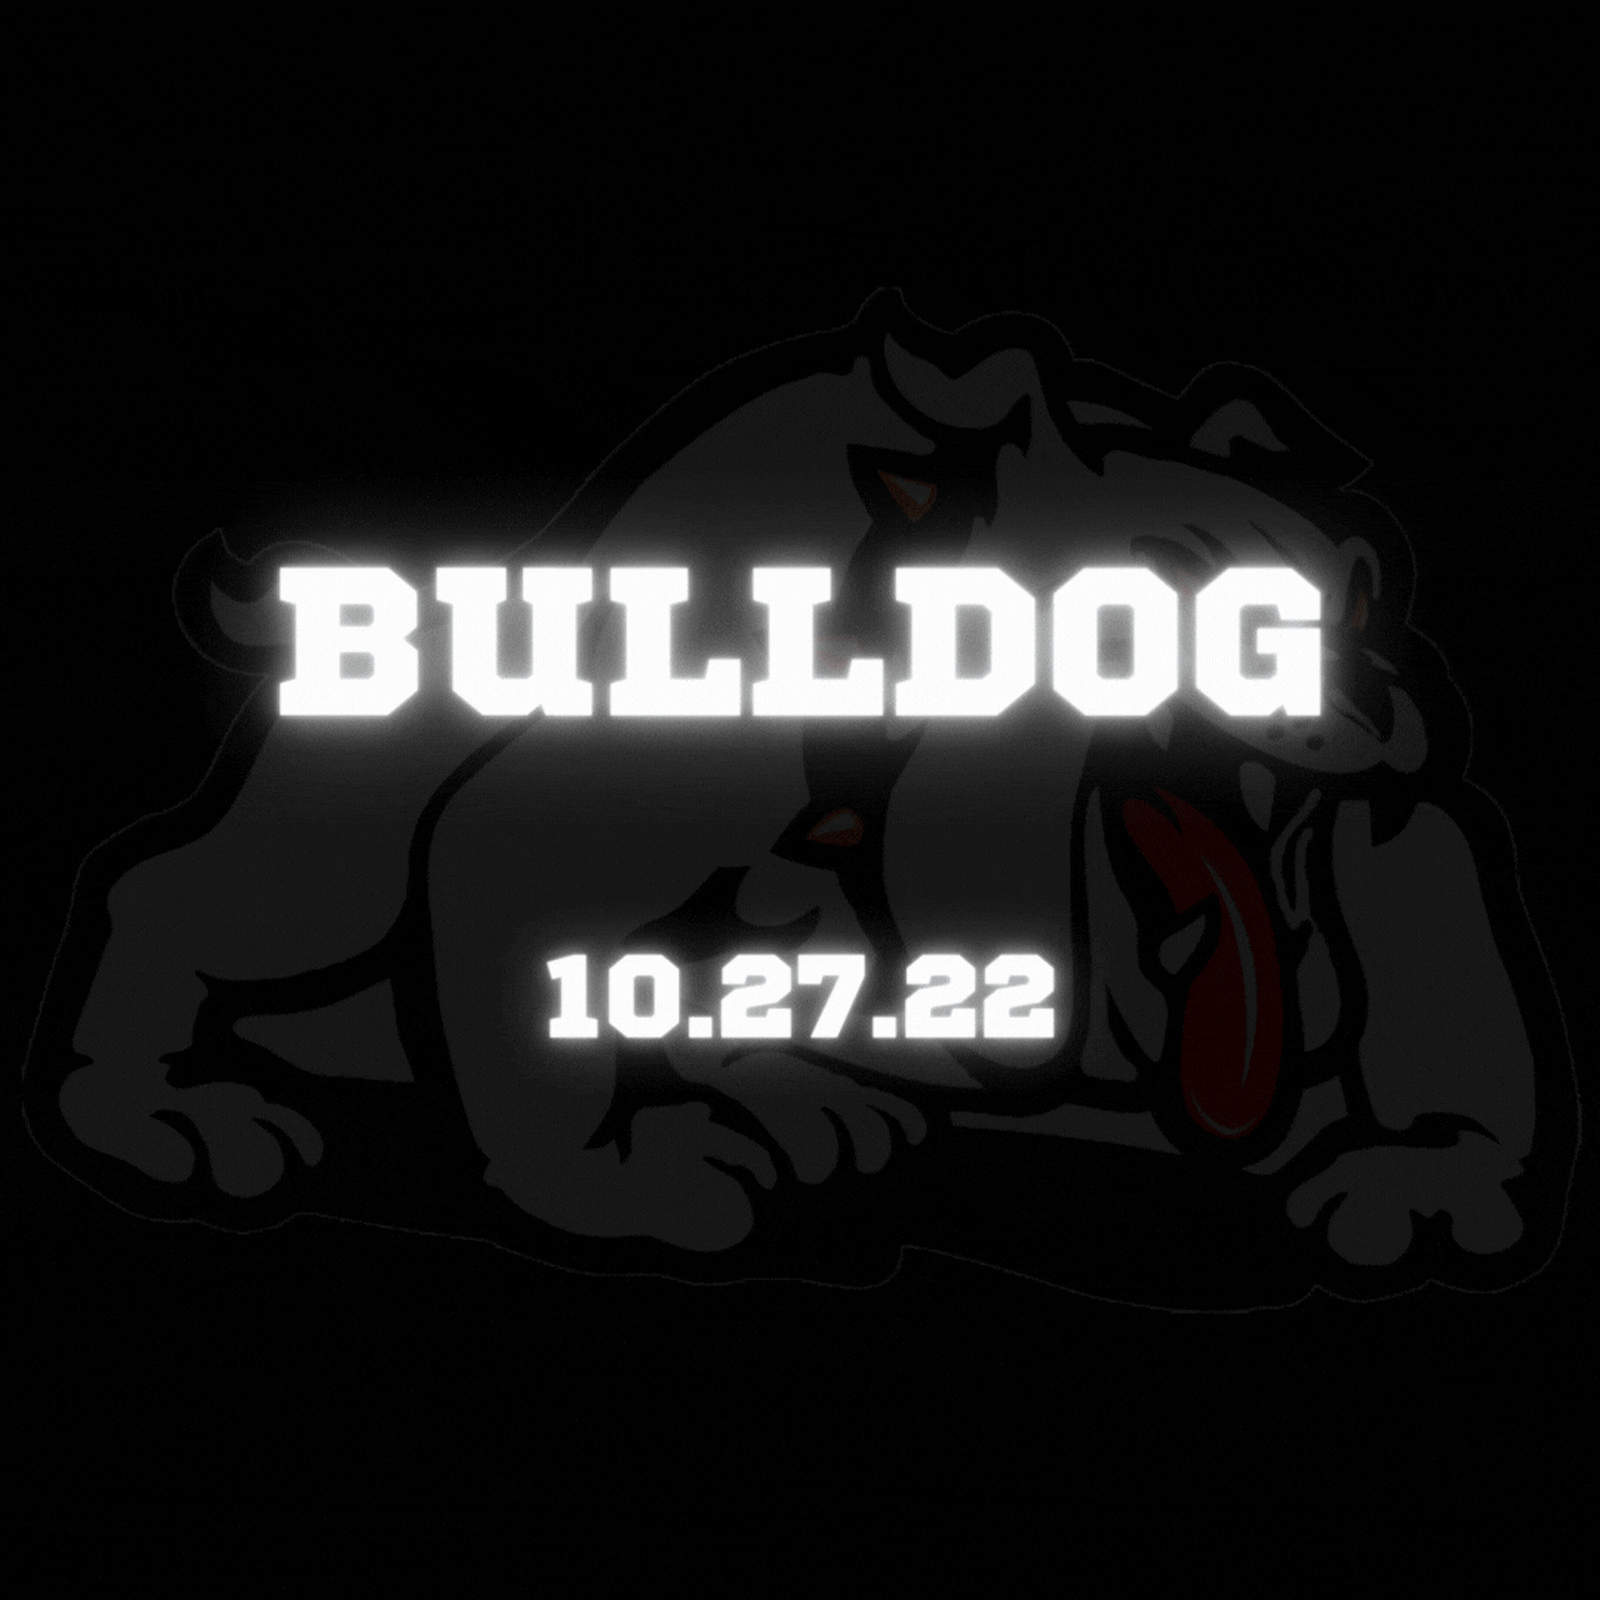 Second Annual Bulldog Blackout cover photo